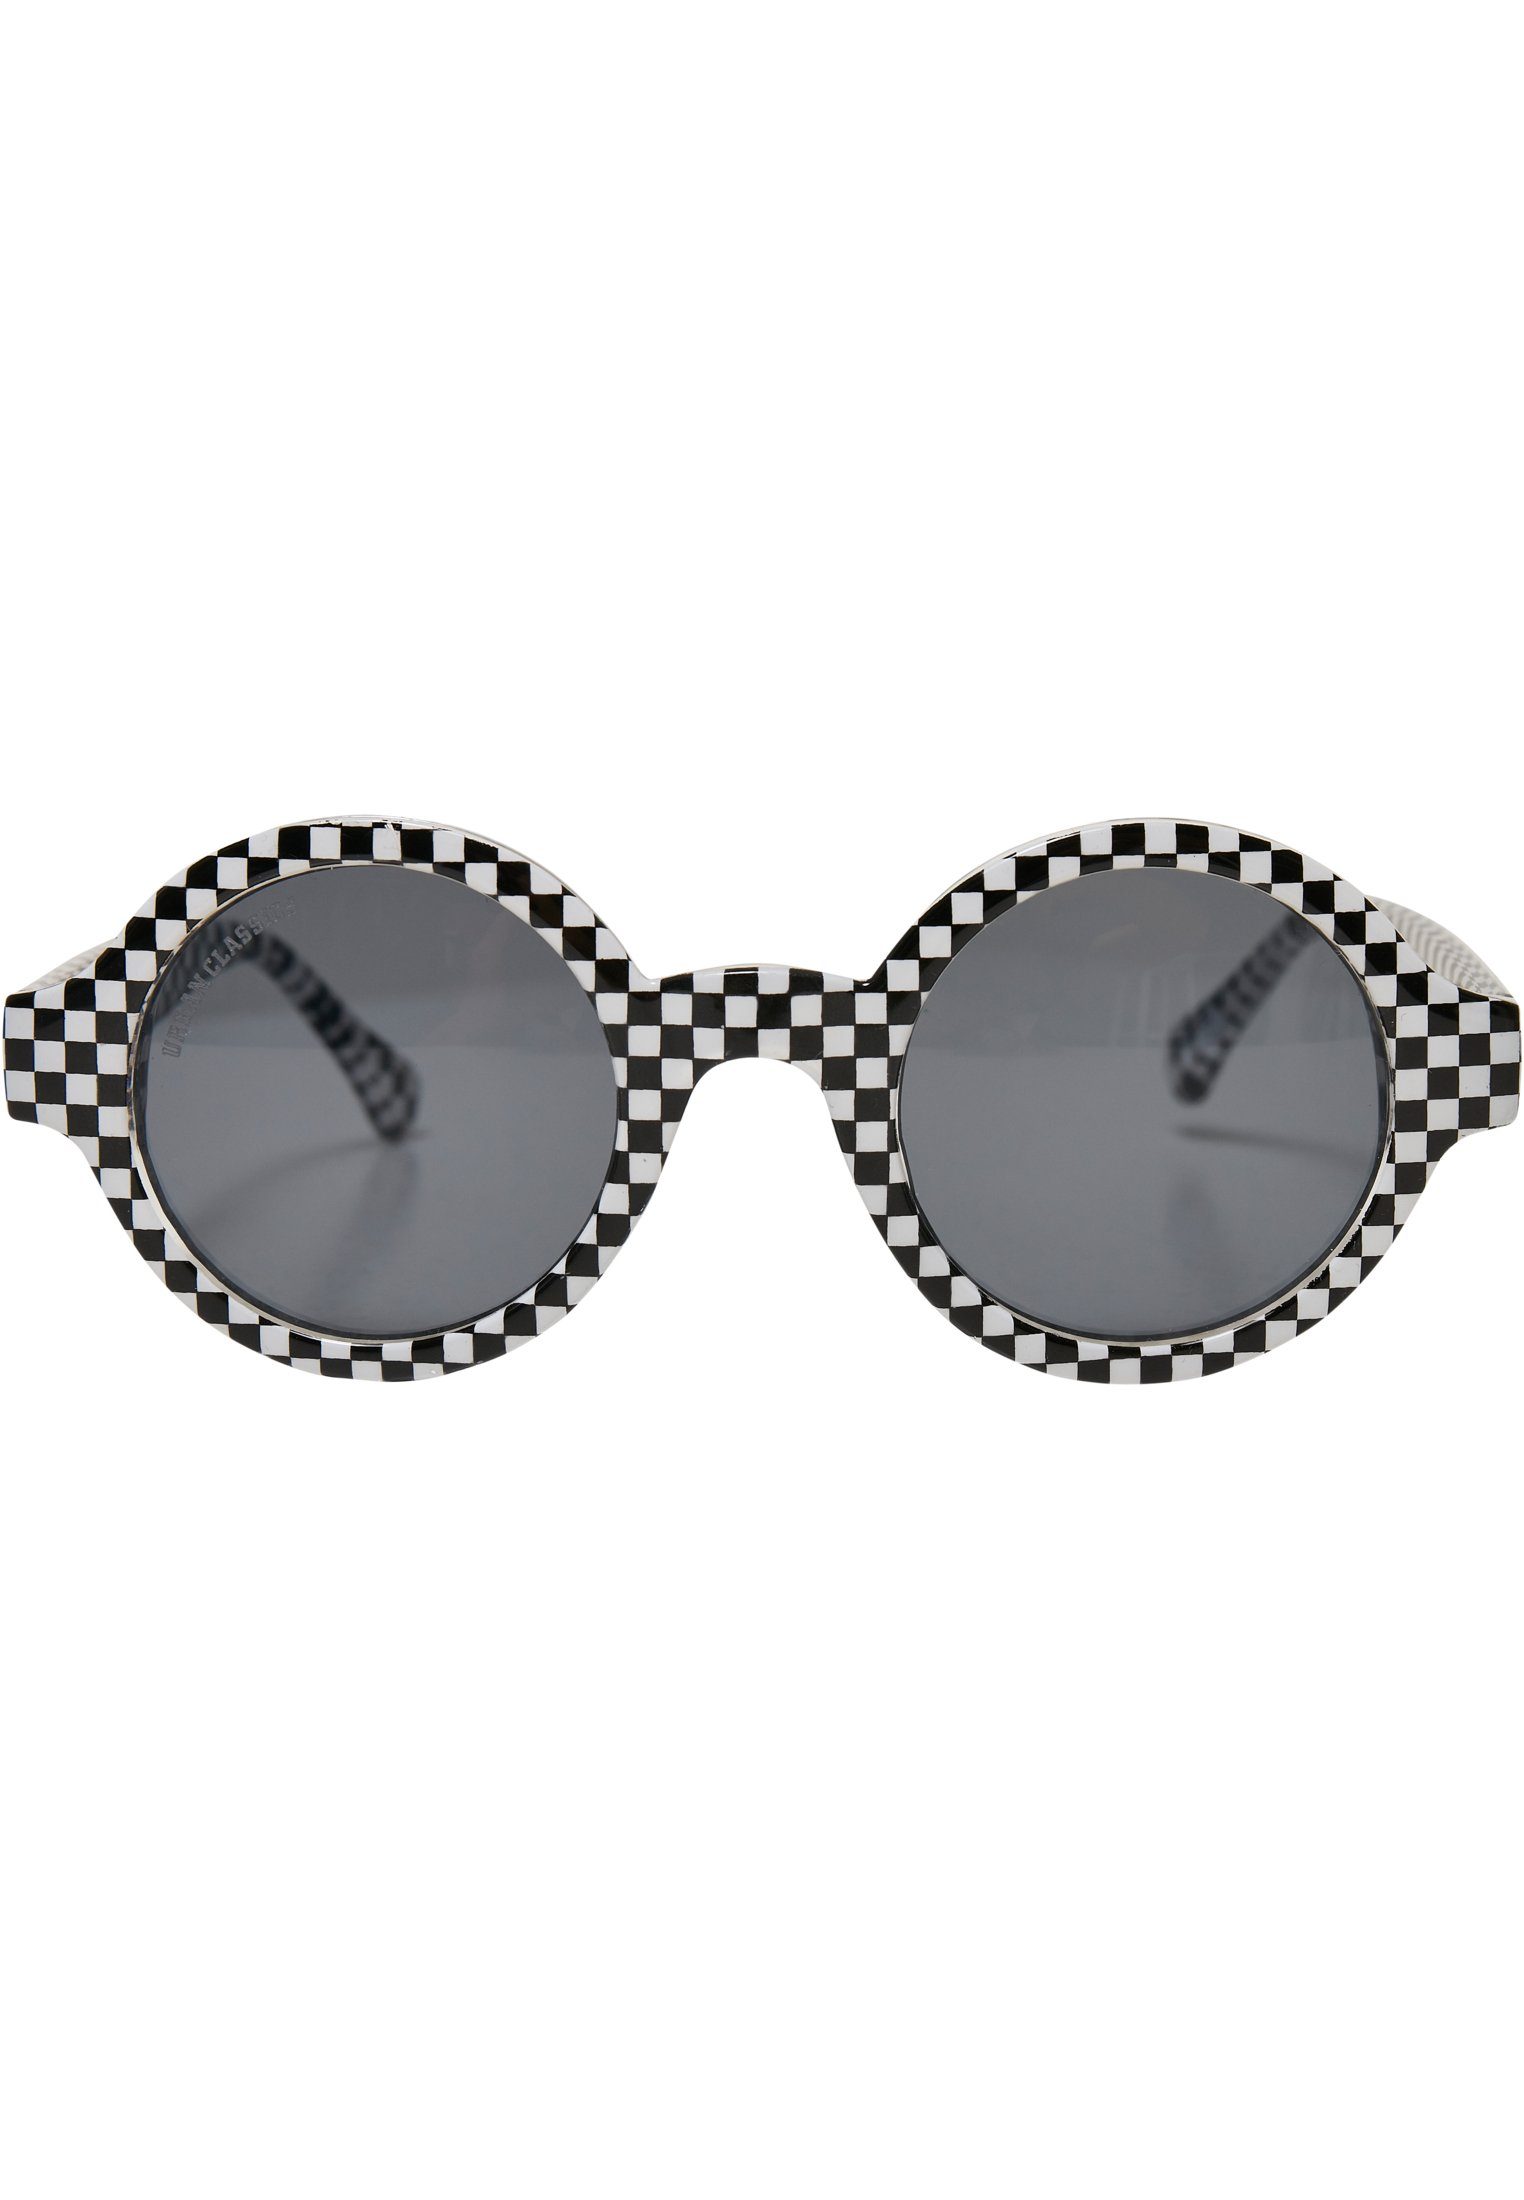 URBAN CLASSICS Sunglasses black/white Sonnenbrille UC Funk Accessoires Retro